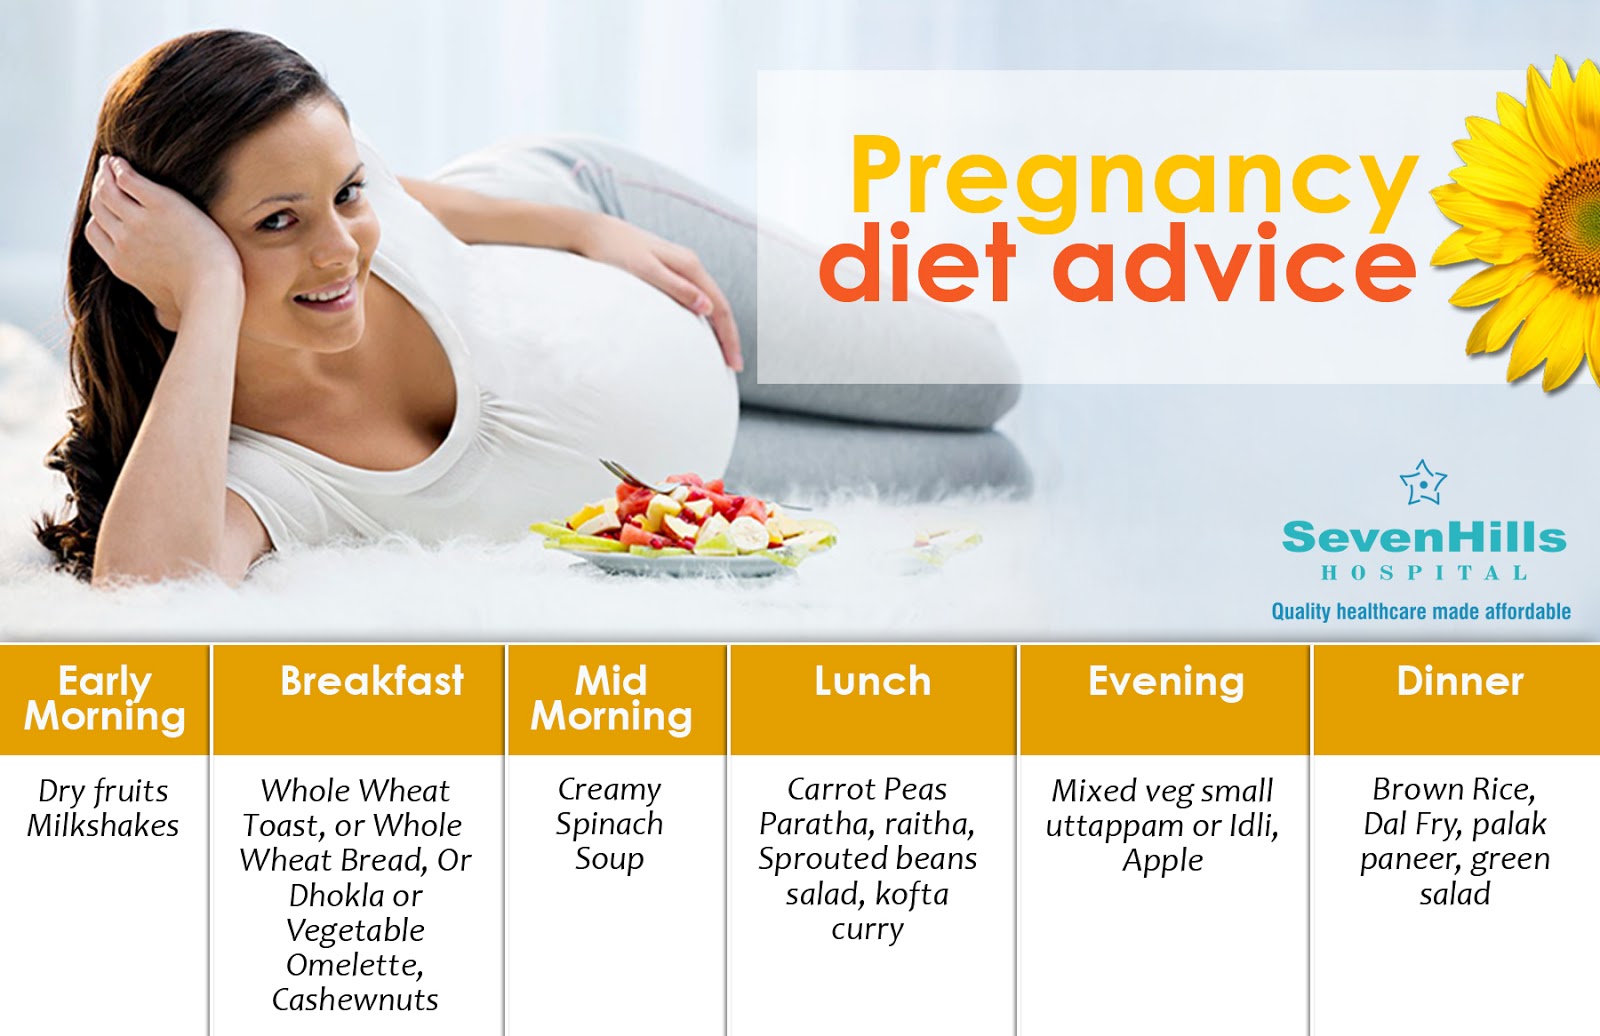 Pregnancy Diet Advice"